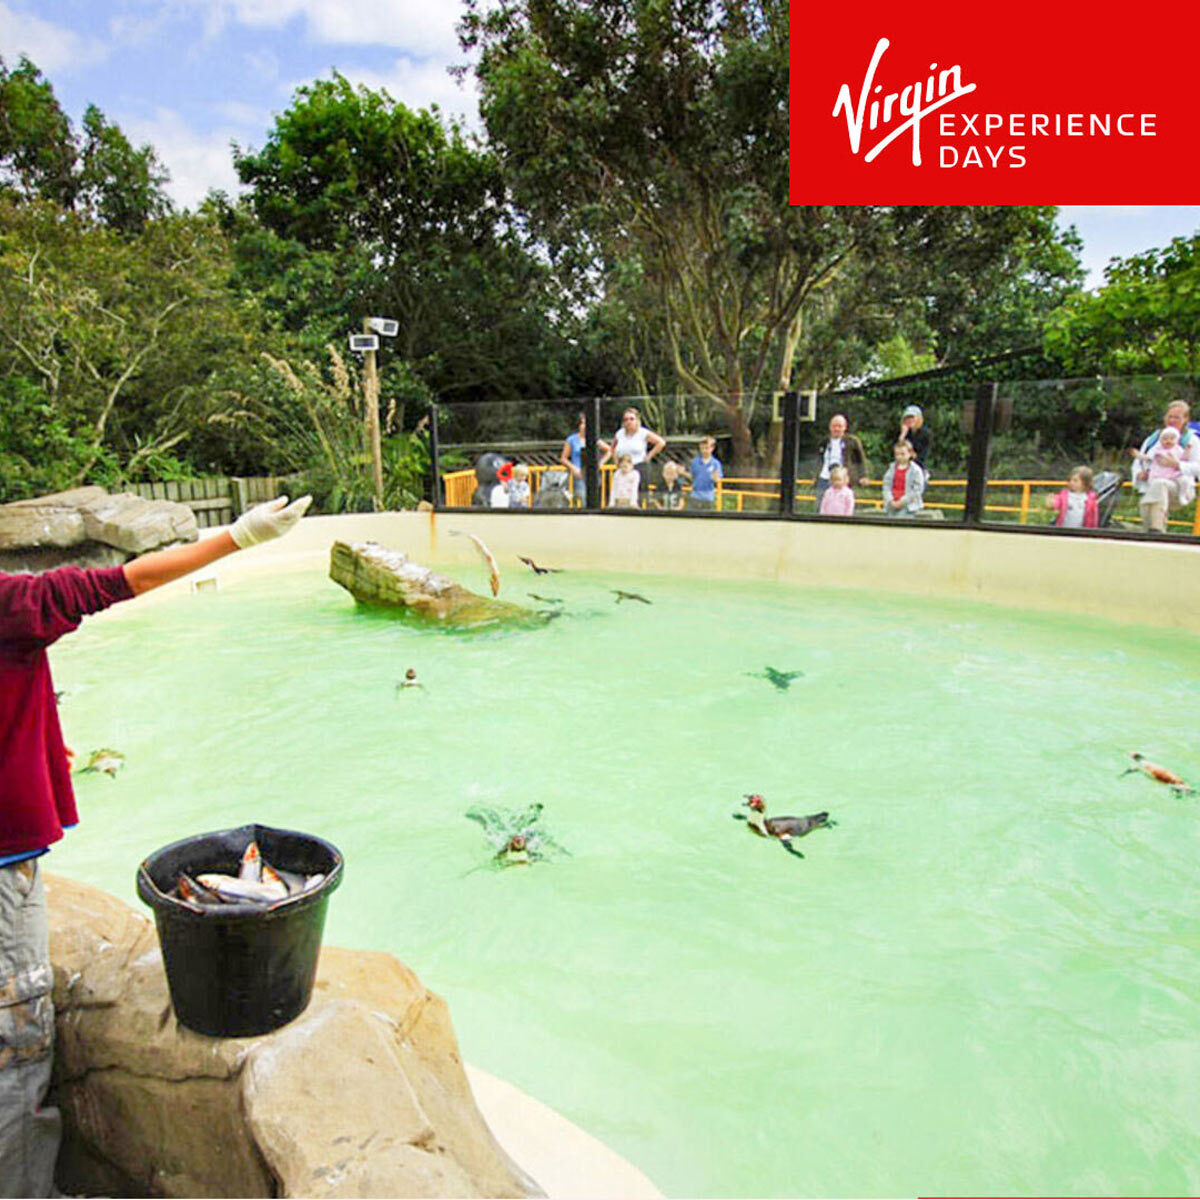 Buy Virgin Experience Penguin Feeding Experience Image1 at Costco.co.uk